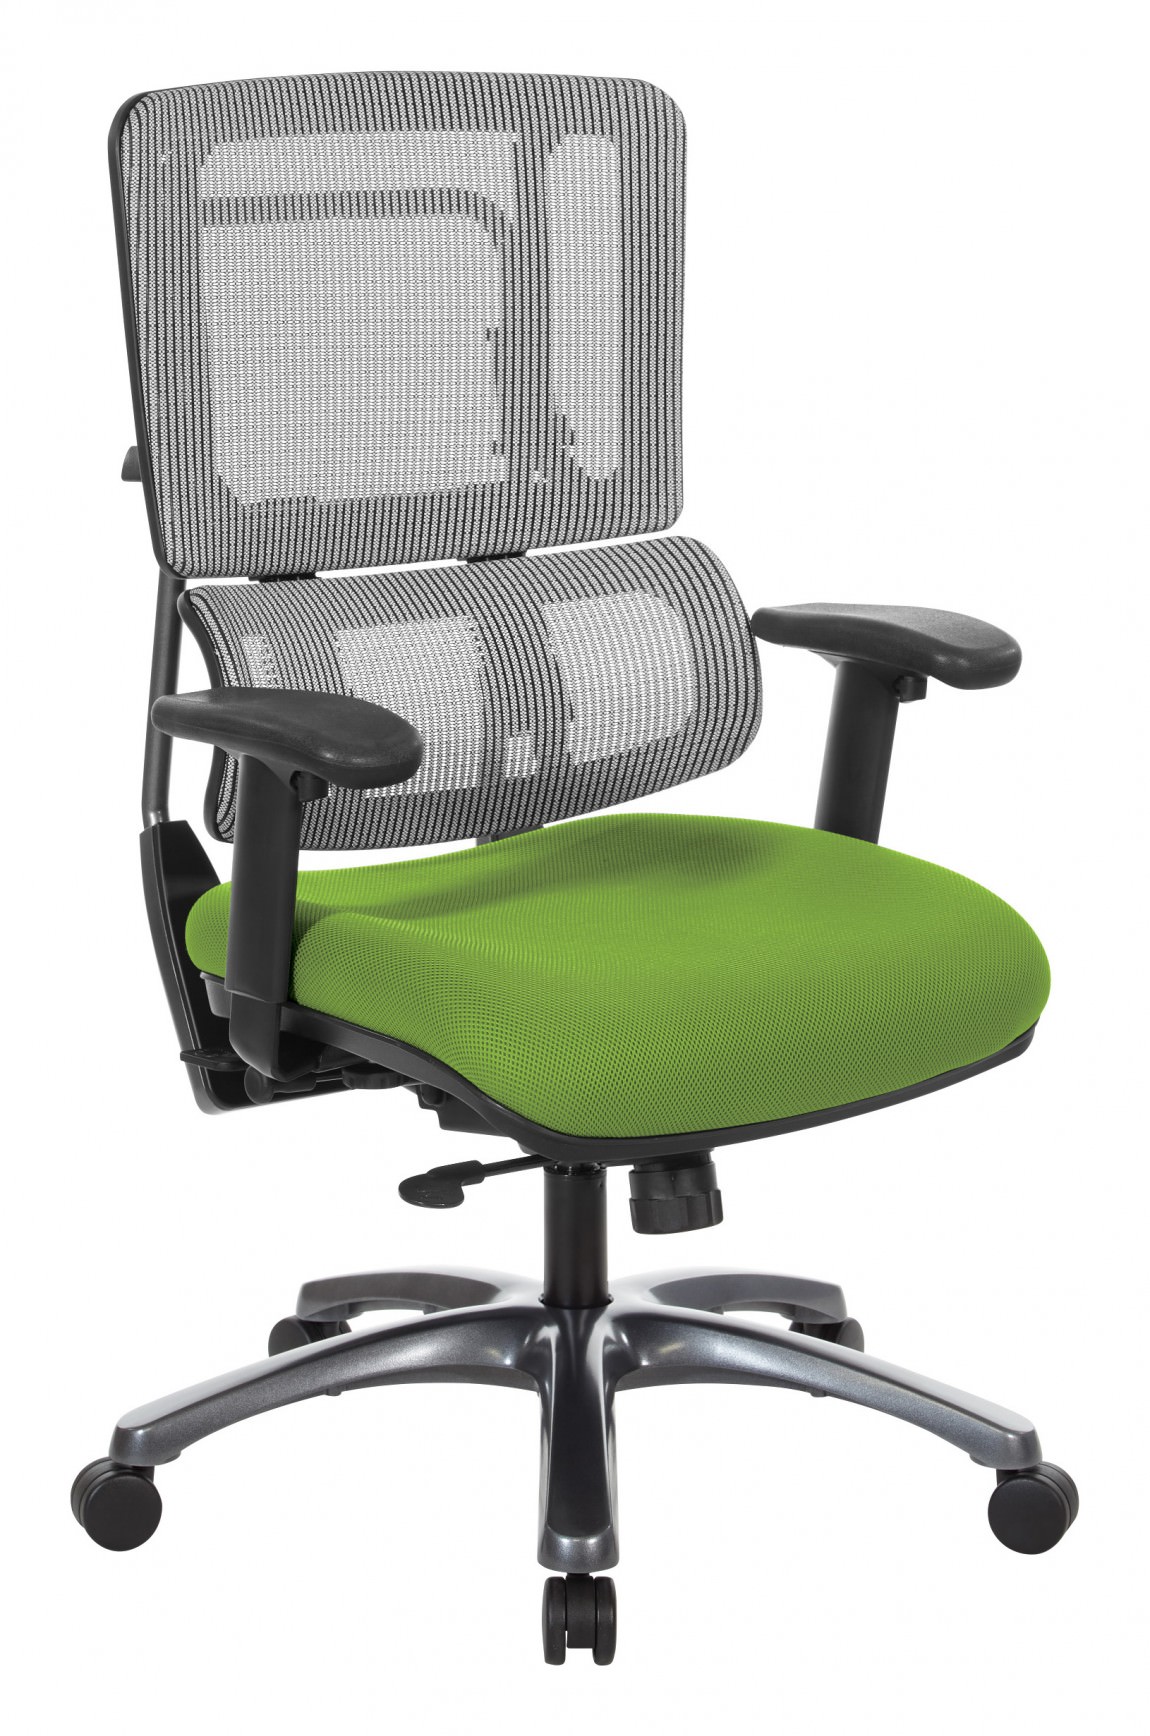 https://madisonliquidators.com/images/p/1150/26788-adjustable-lumbar-support-task-chair-1.jpg